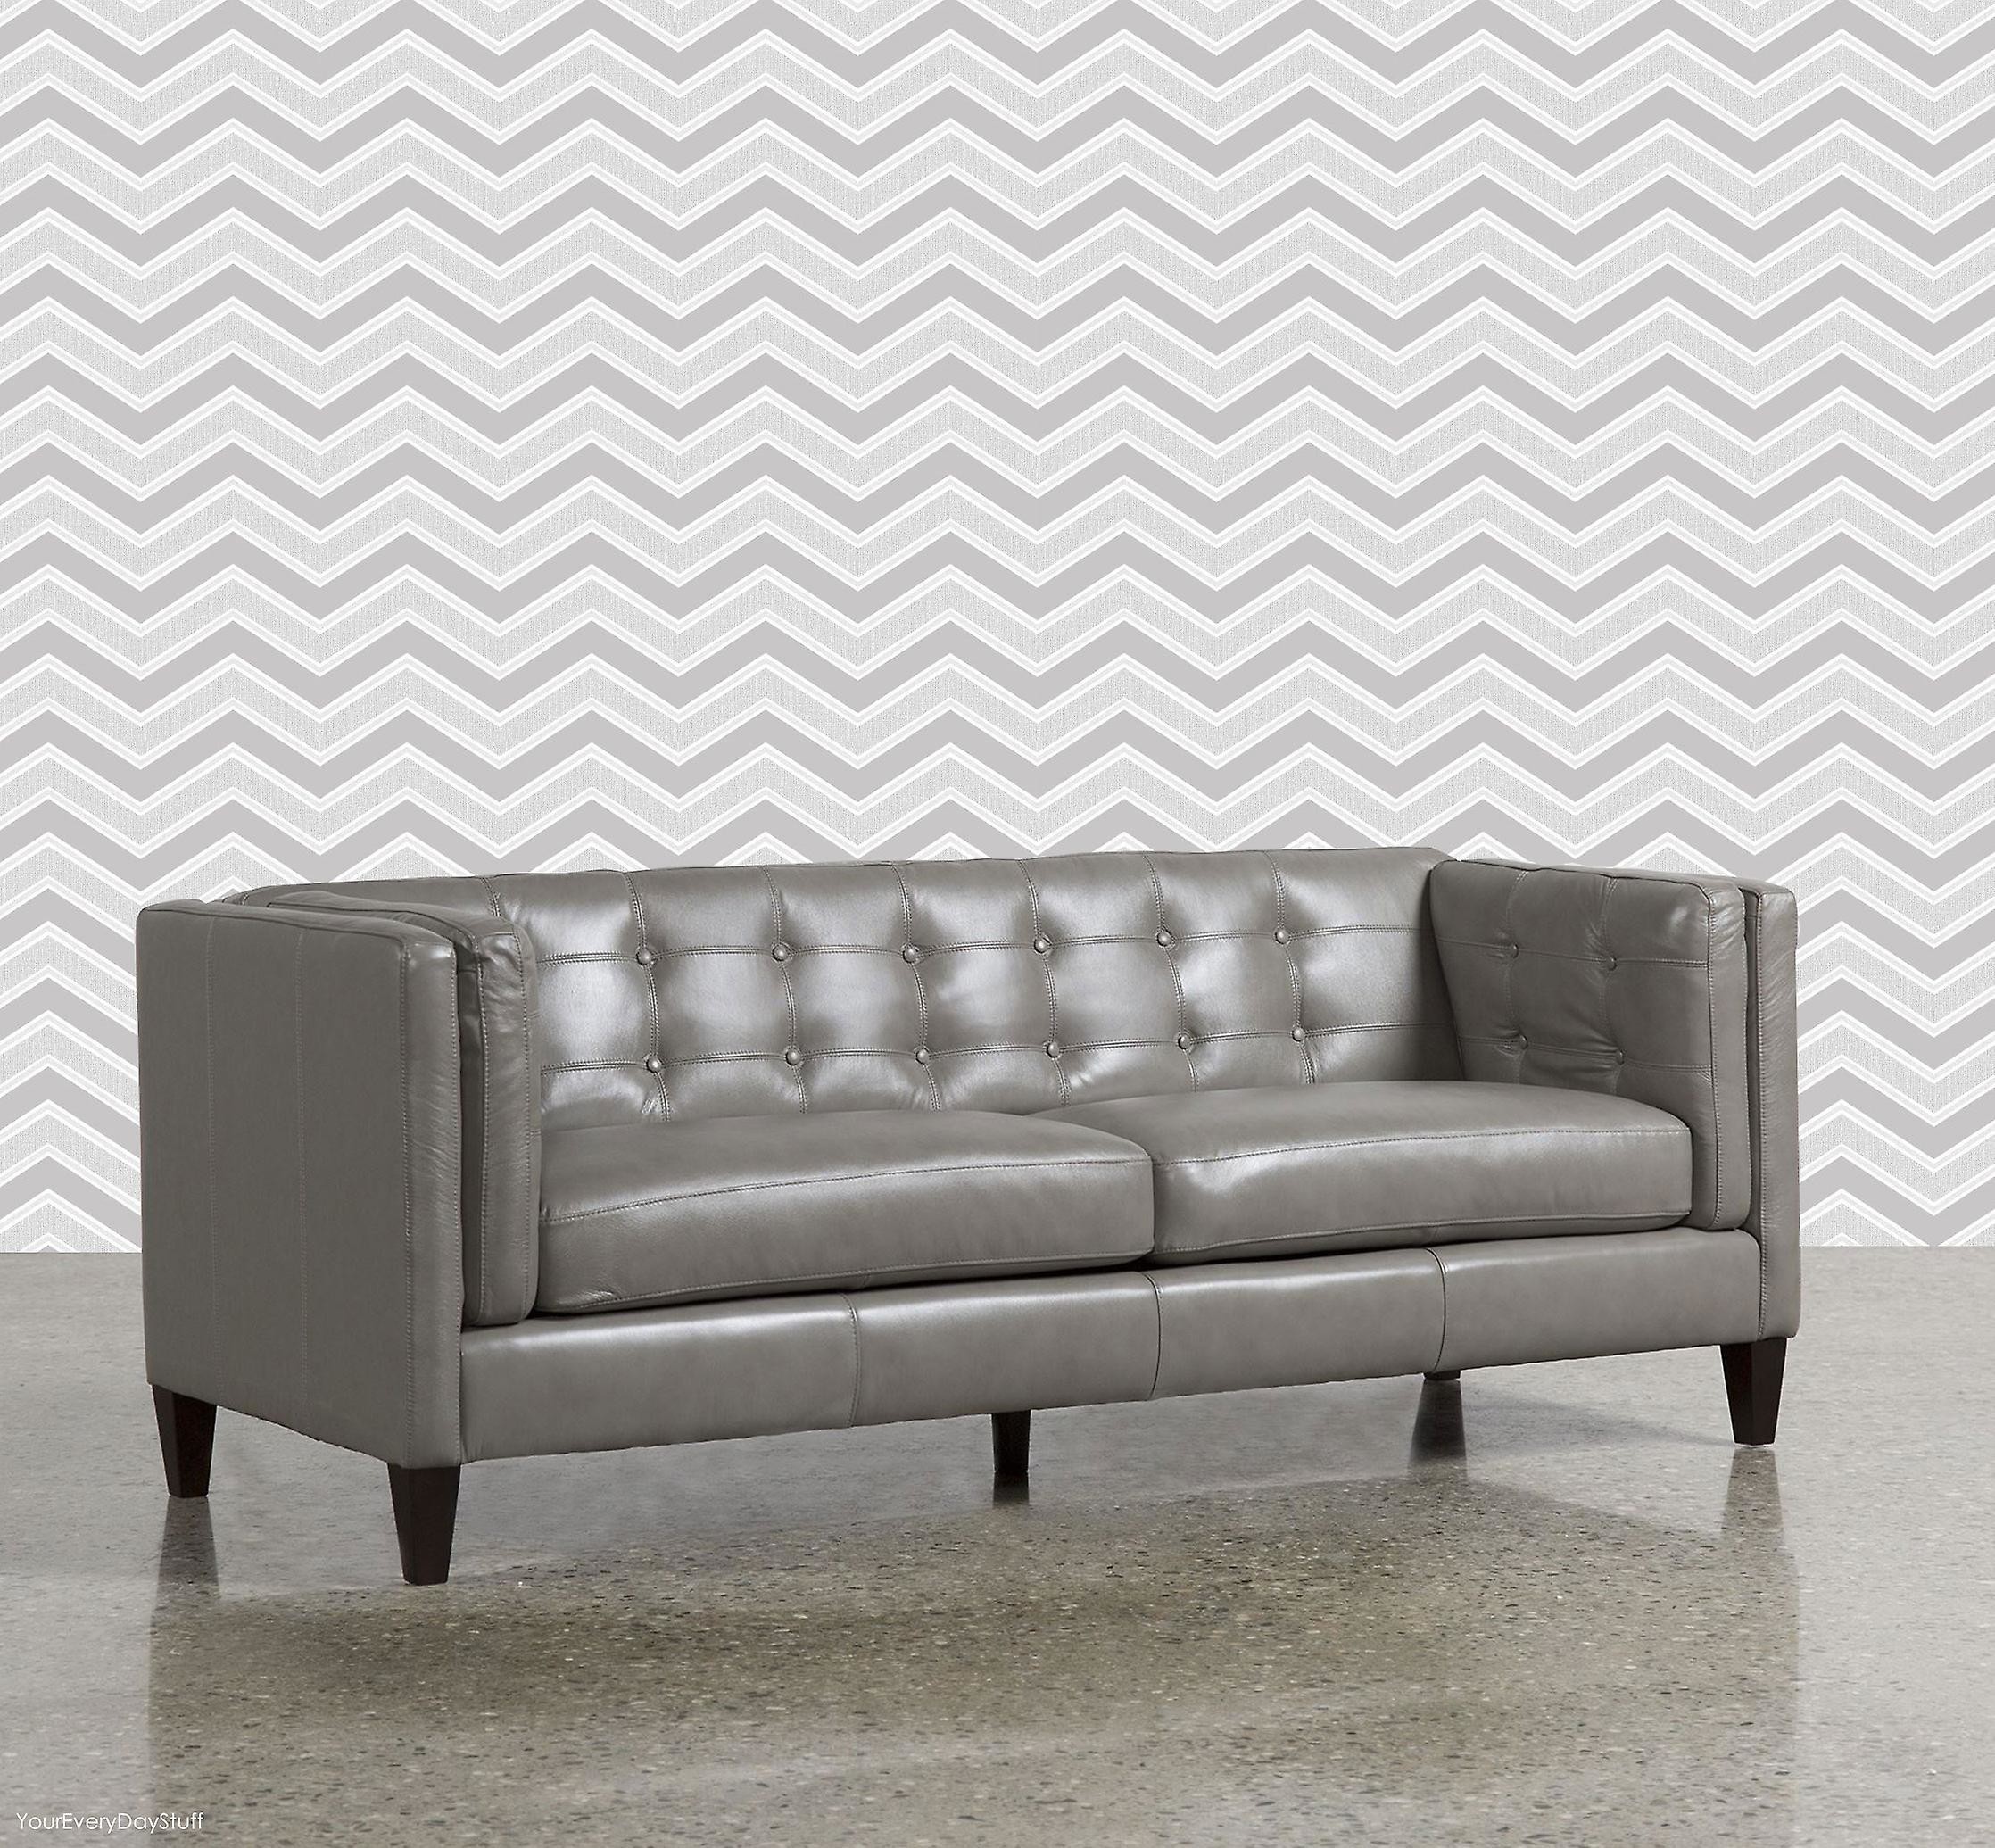 Geometric Wallpaper Modern Glitter Sparkle Chevron - Couch - HD Wallpaper 